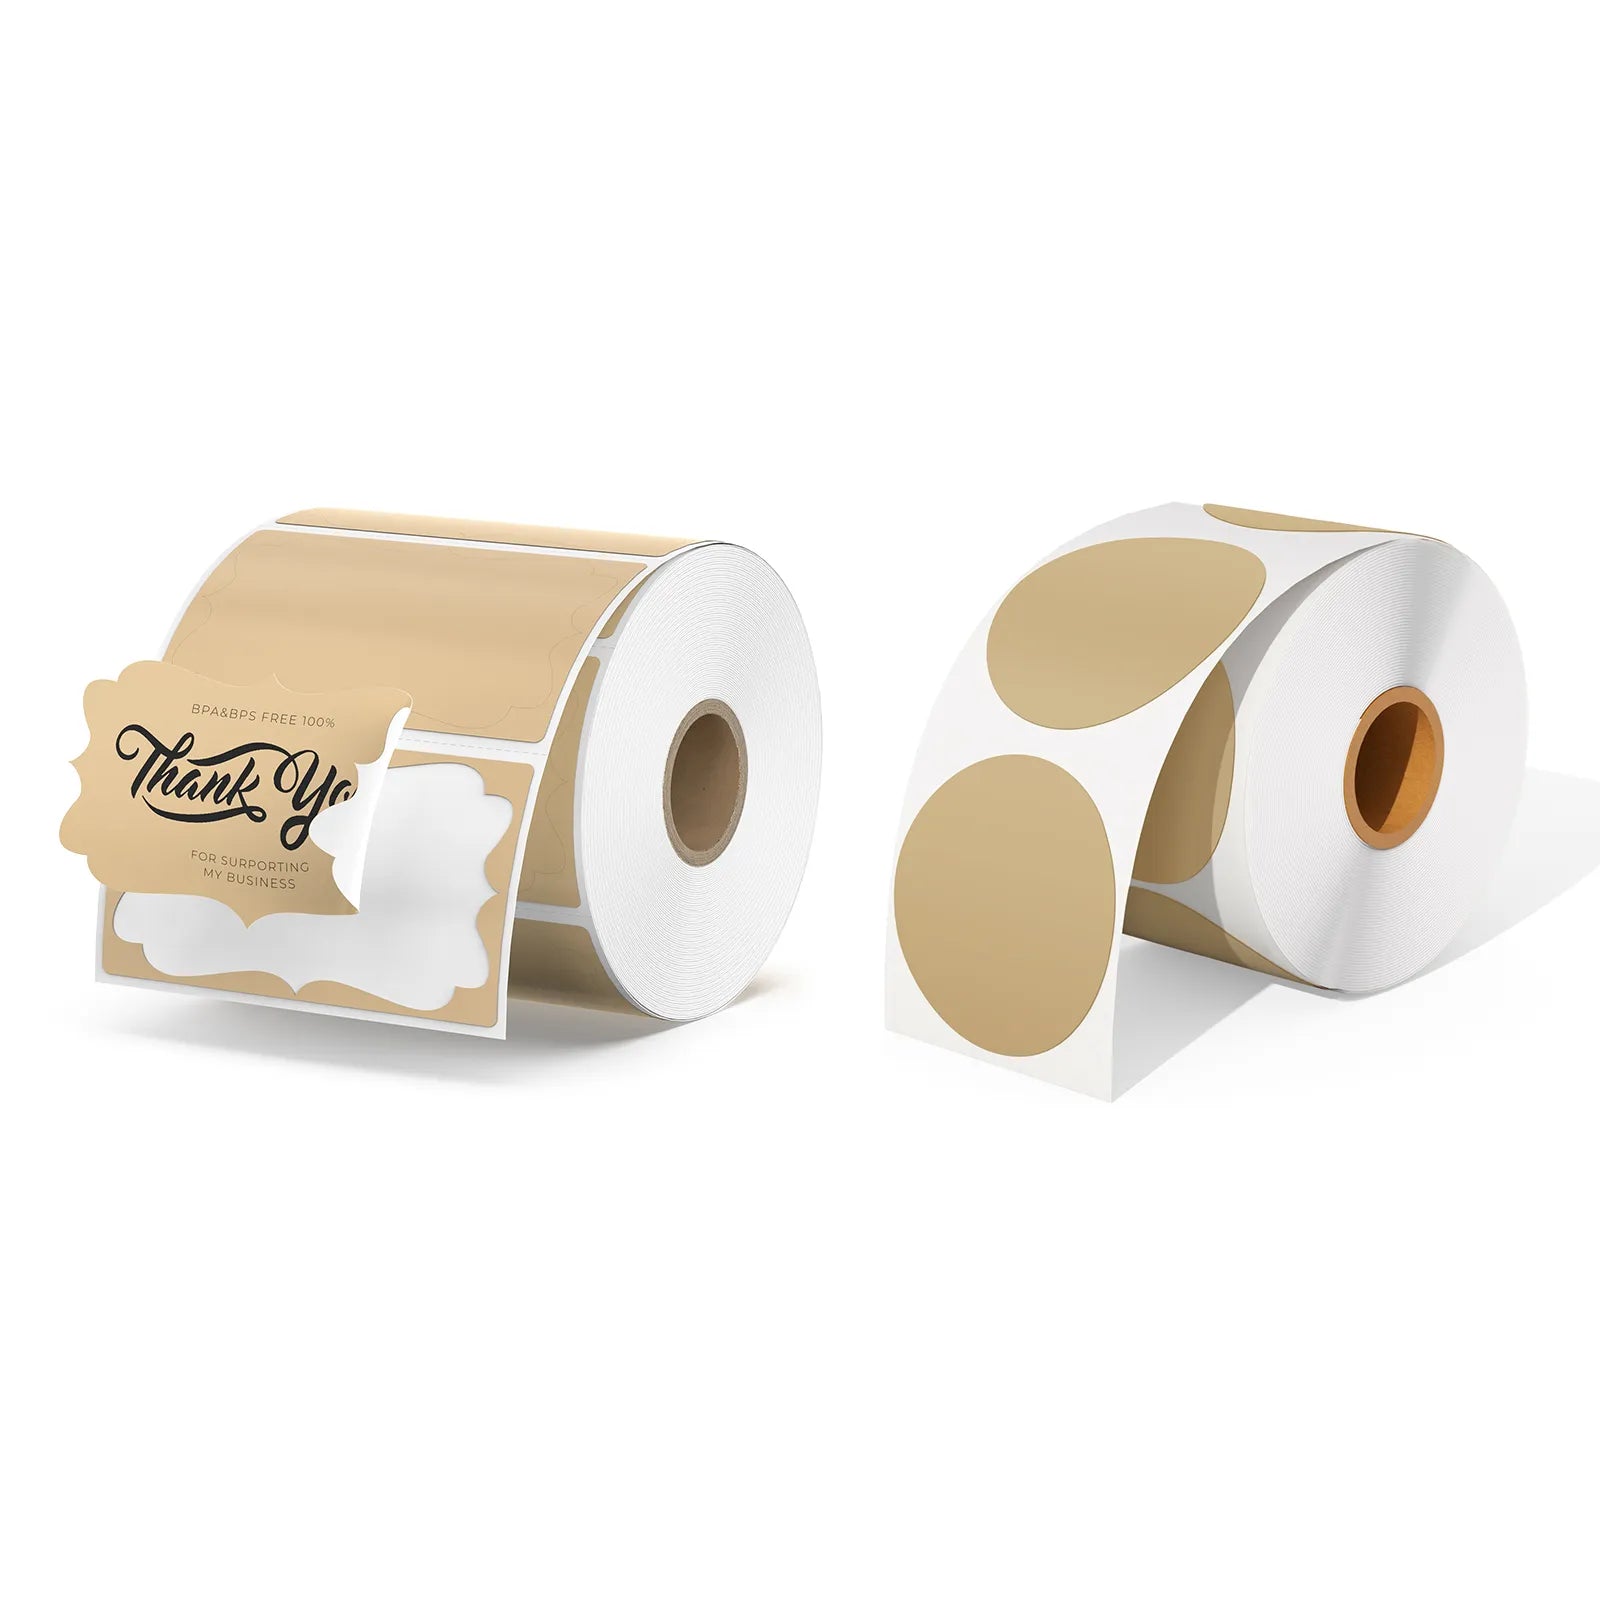 Brown Kraft Paper Roll, Package Paper, Simple Elegant Wrapping